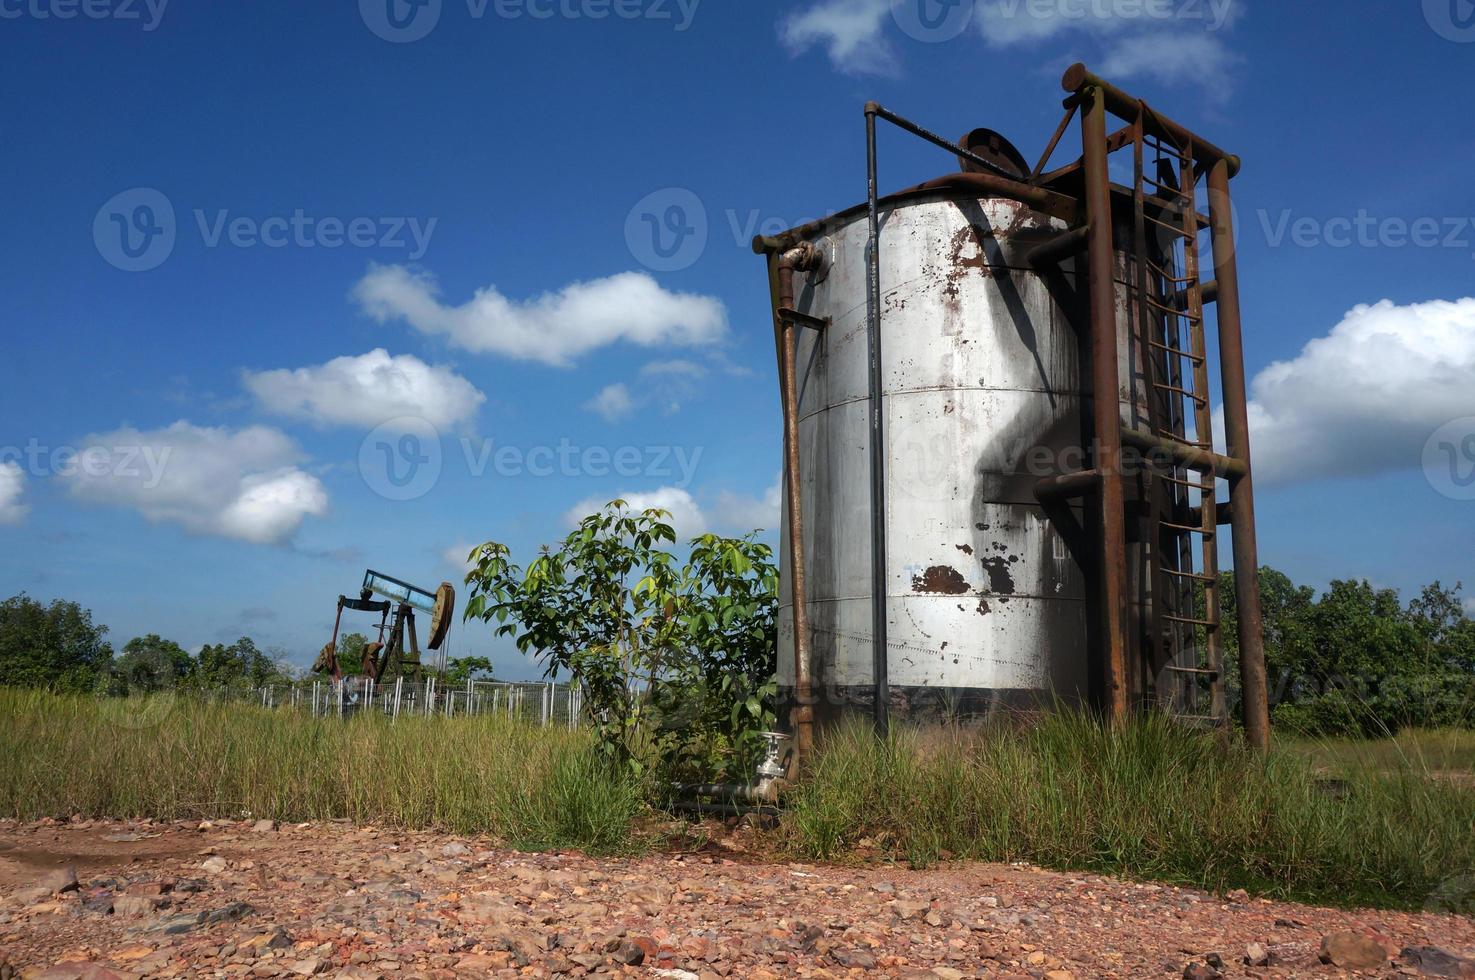 Öl-Pumpe Jack (Sauger Rod Beam) Stockbild - Bild von industrie